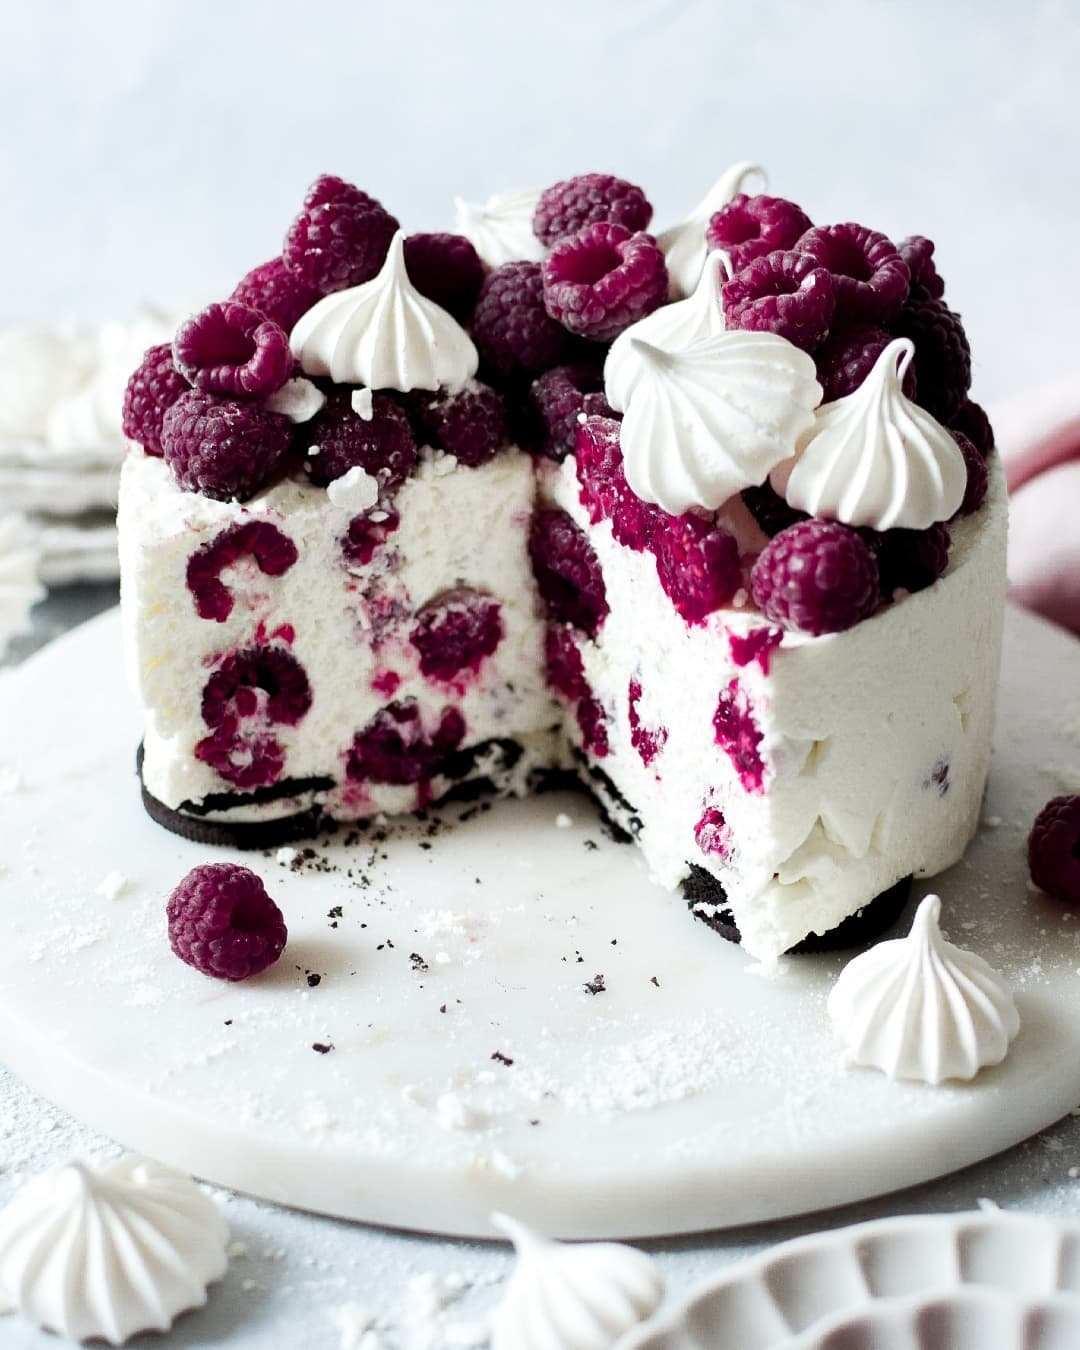 Coconut cheesecake with raspberries